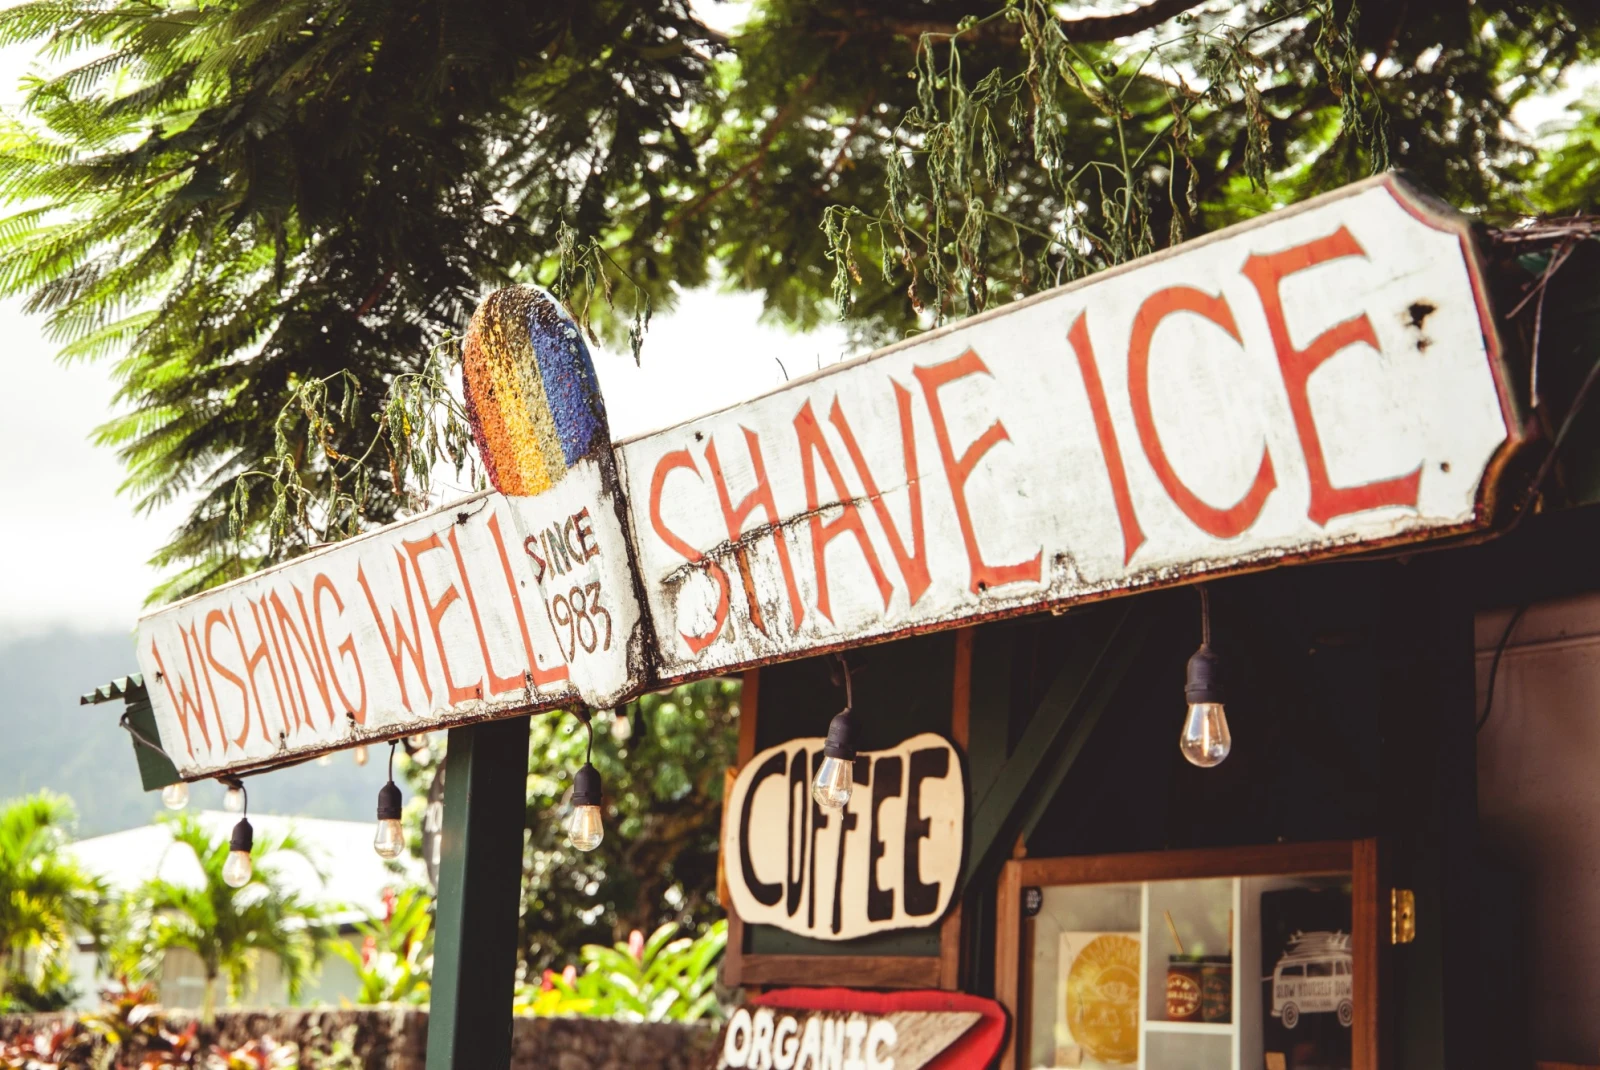 Beachfront shack serving shaved ice